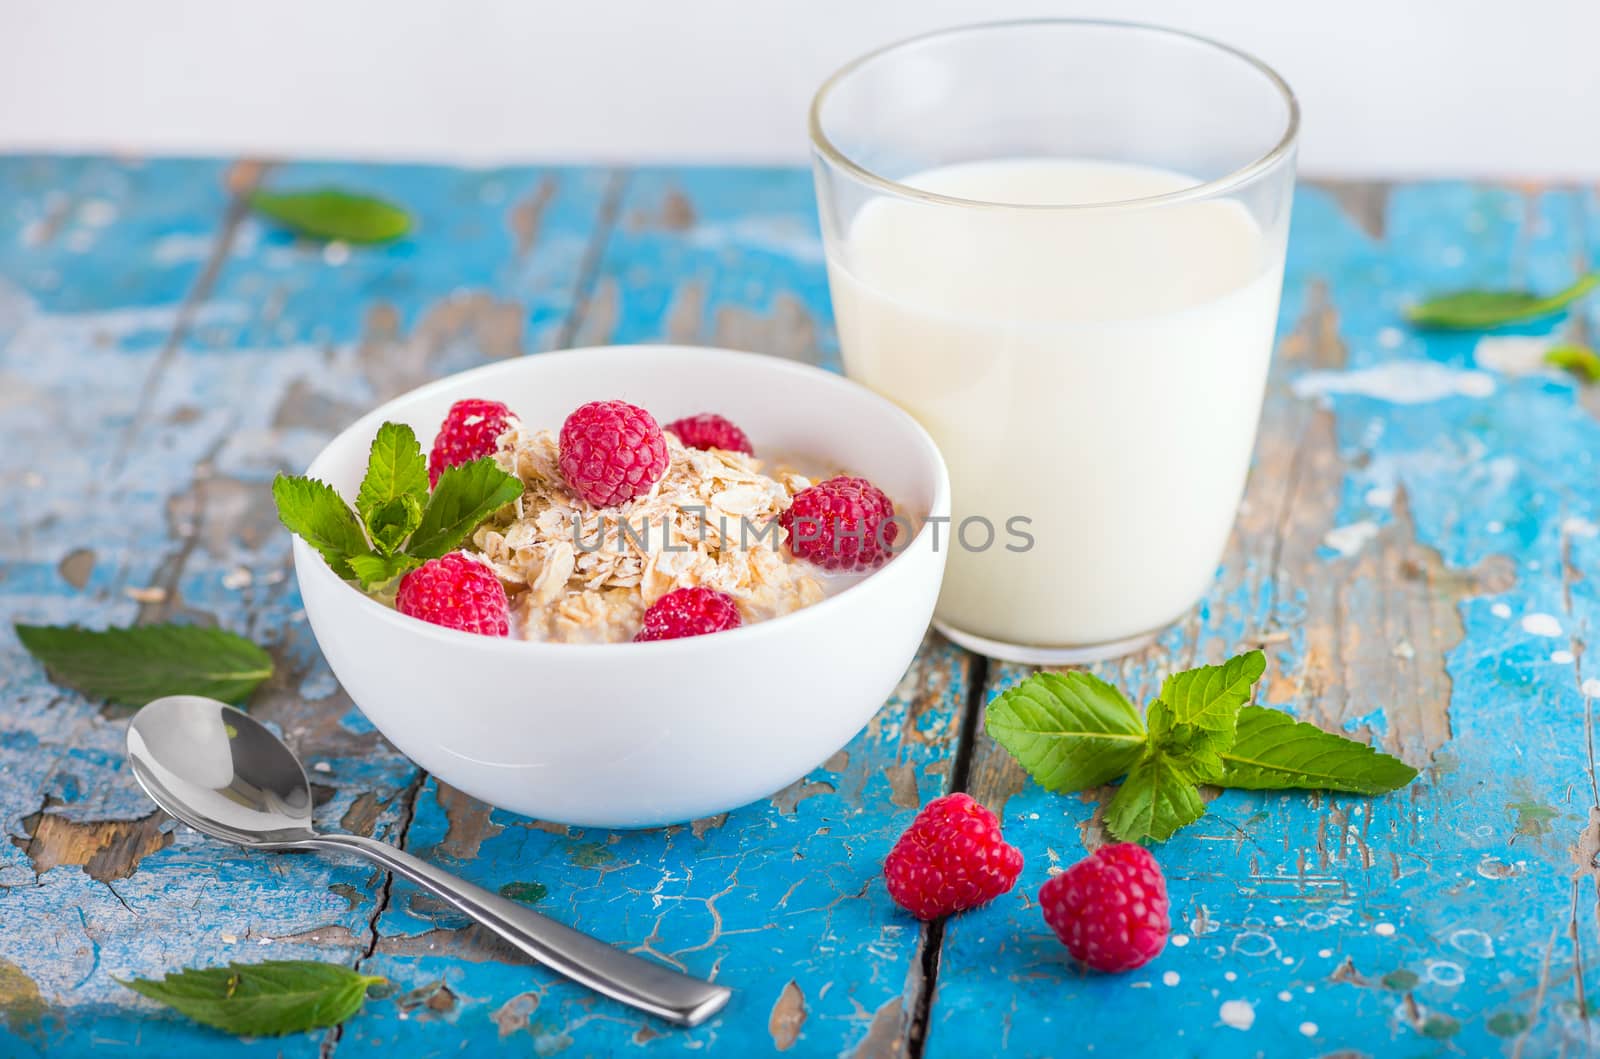 Oat flakes with milk and frash raspberries for breakfast by iprachenko